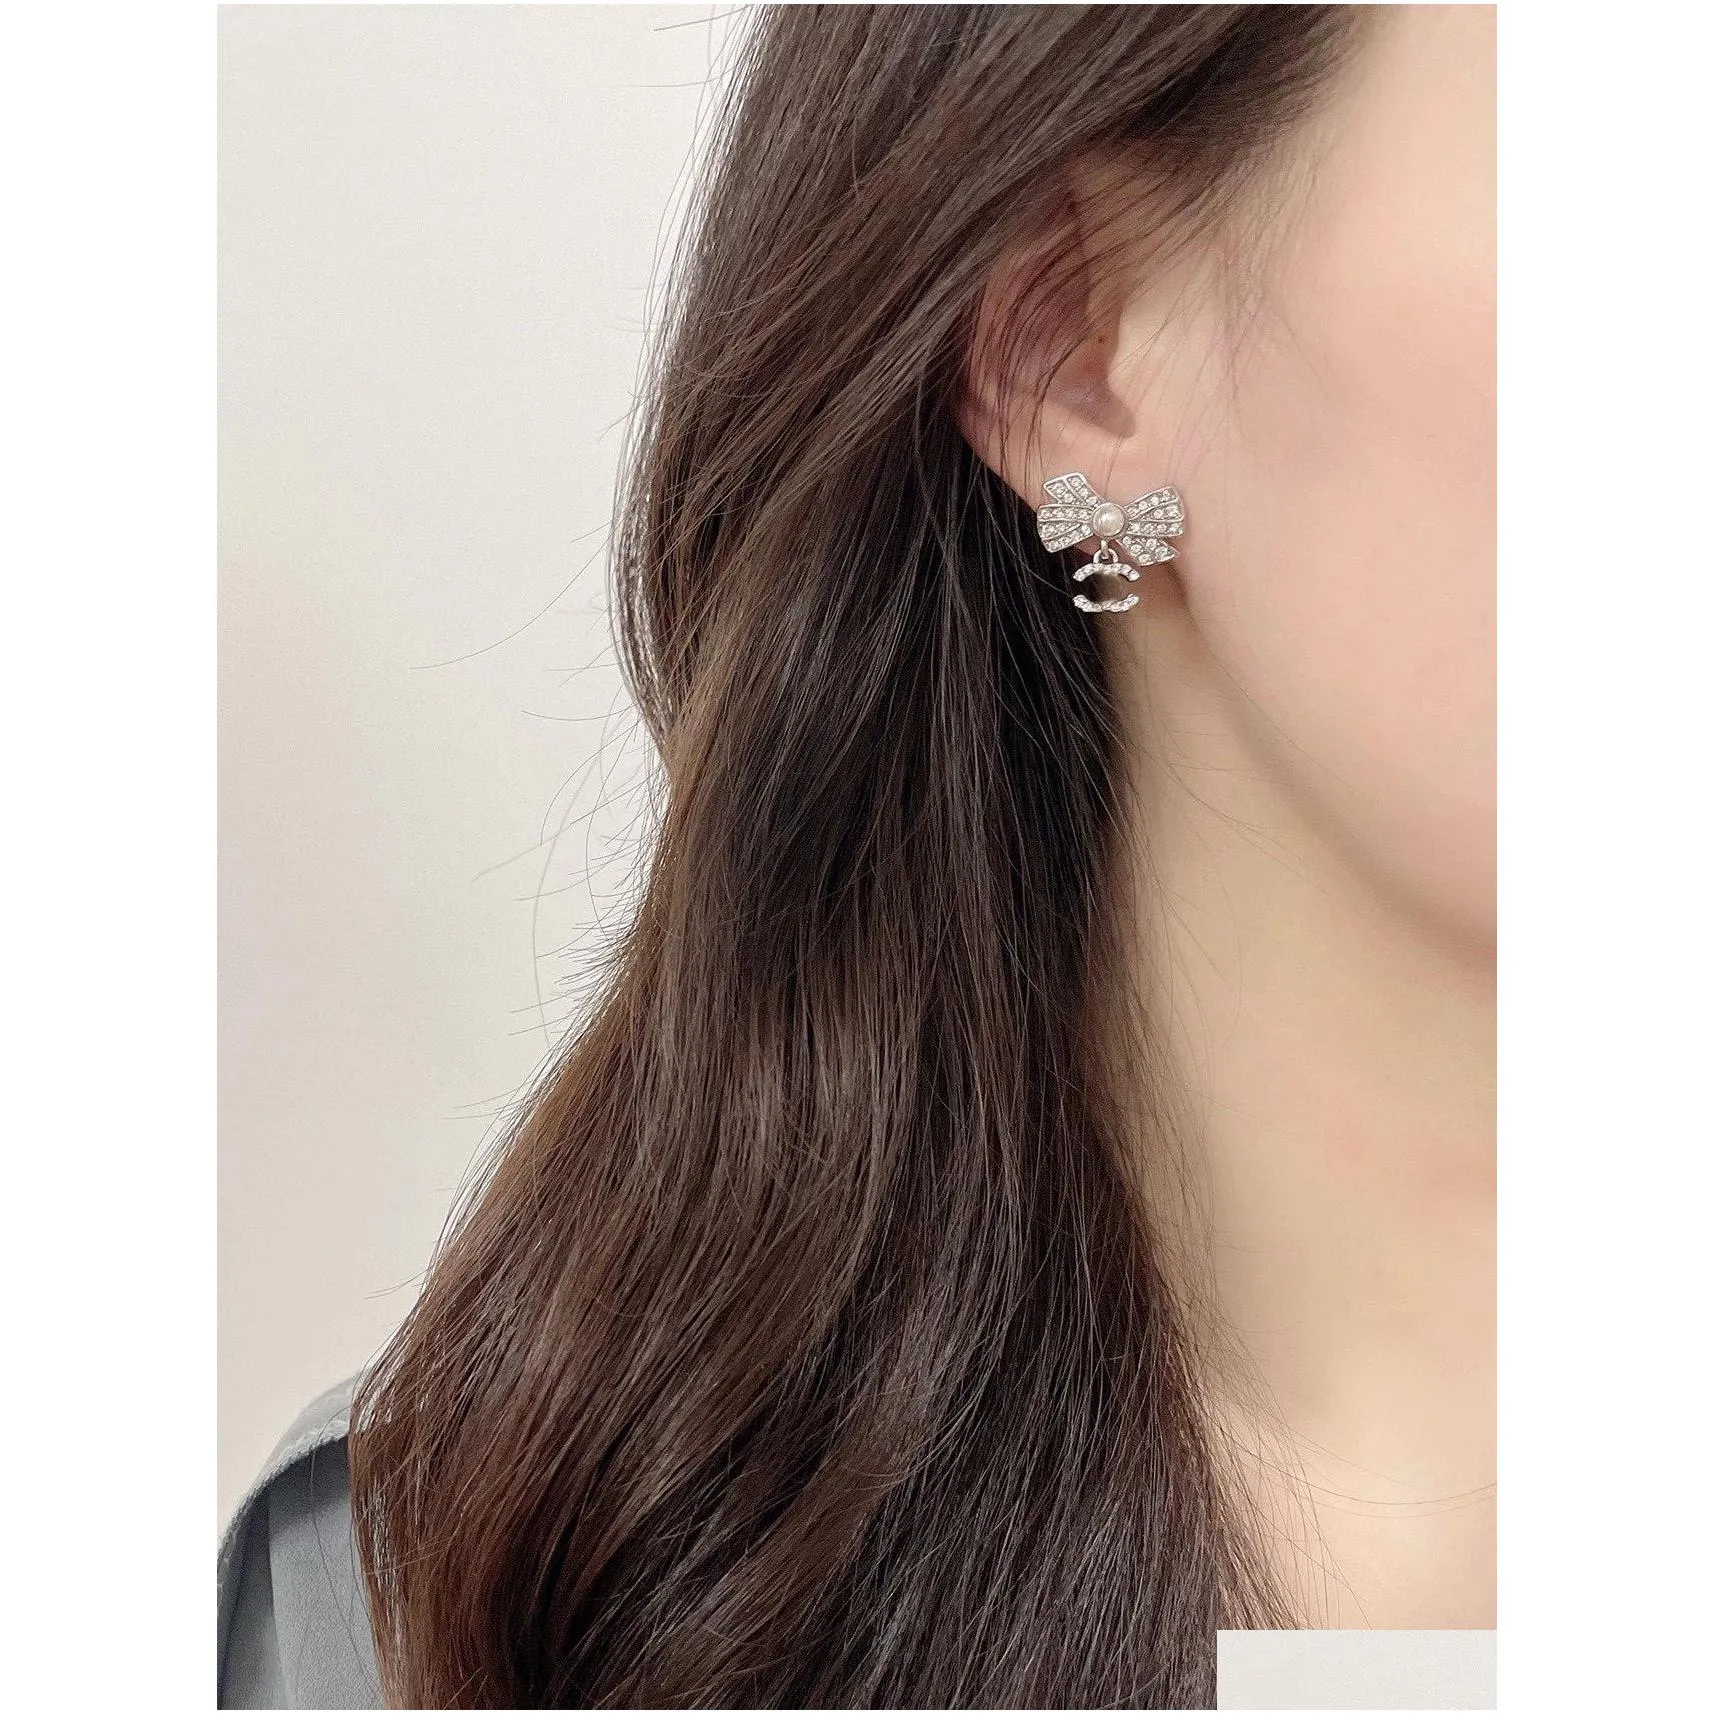 New Original Designer Accessories Flower Stud Earrings Luxury Girls inlay Diamond Earrings 18k Gold Plated Jewelry Stamps Earrings Wedding Party Christmas